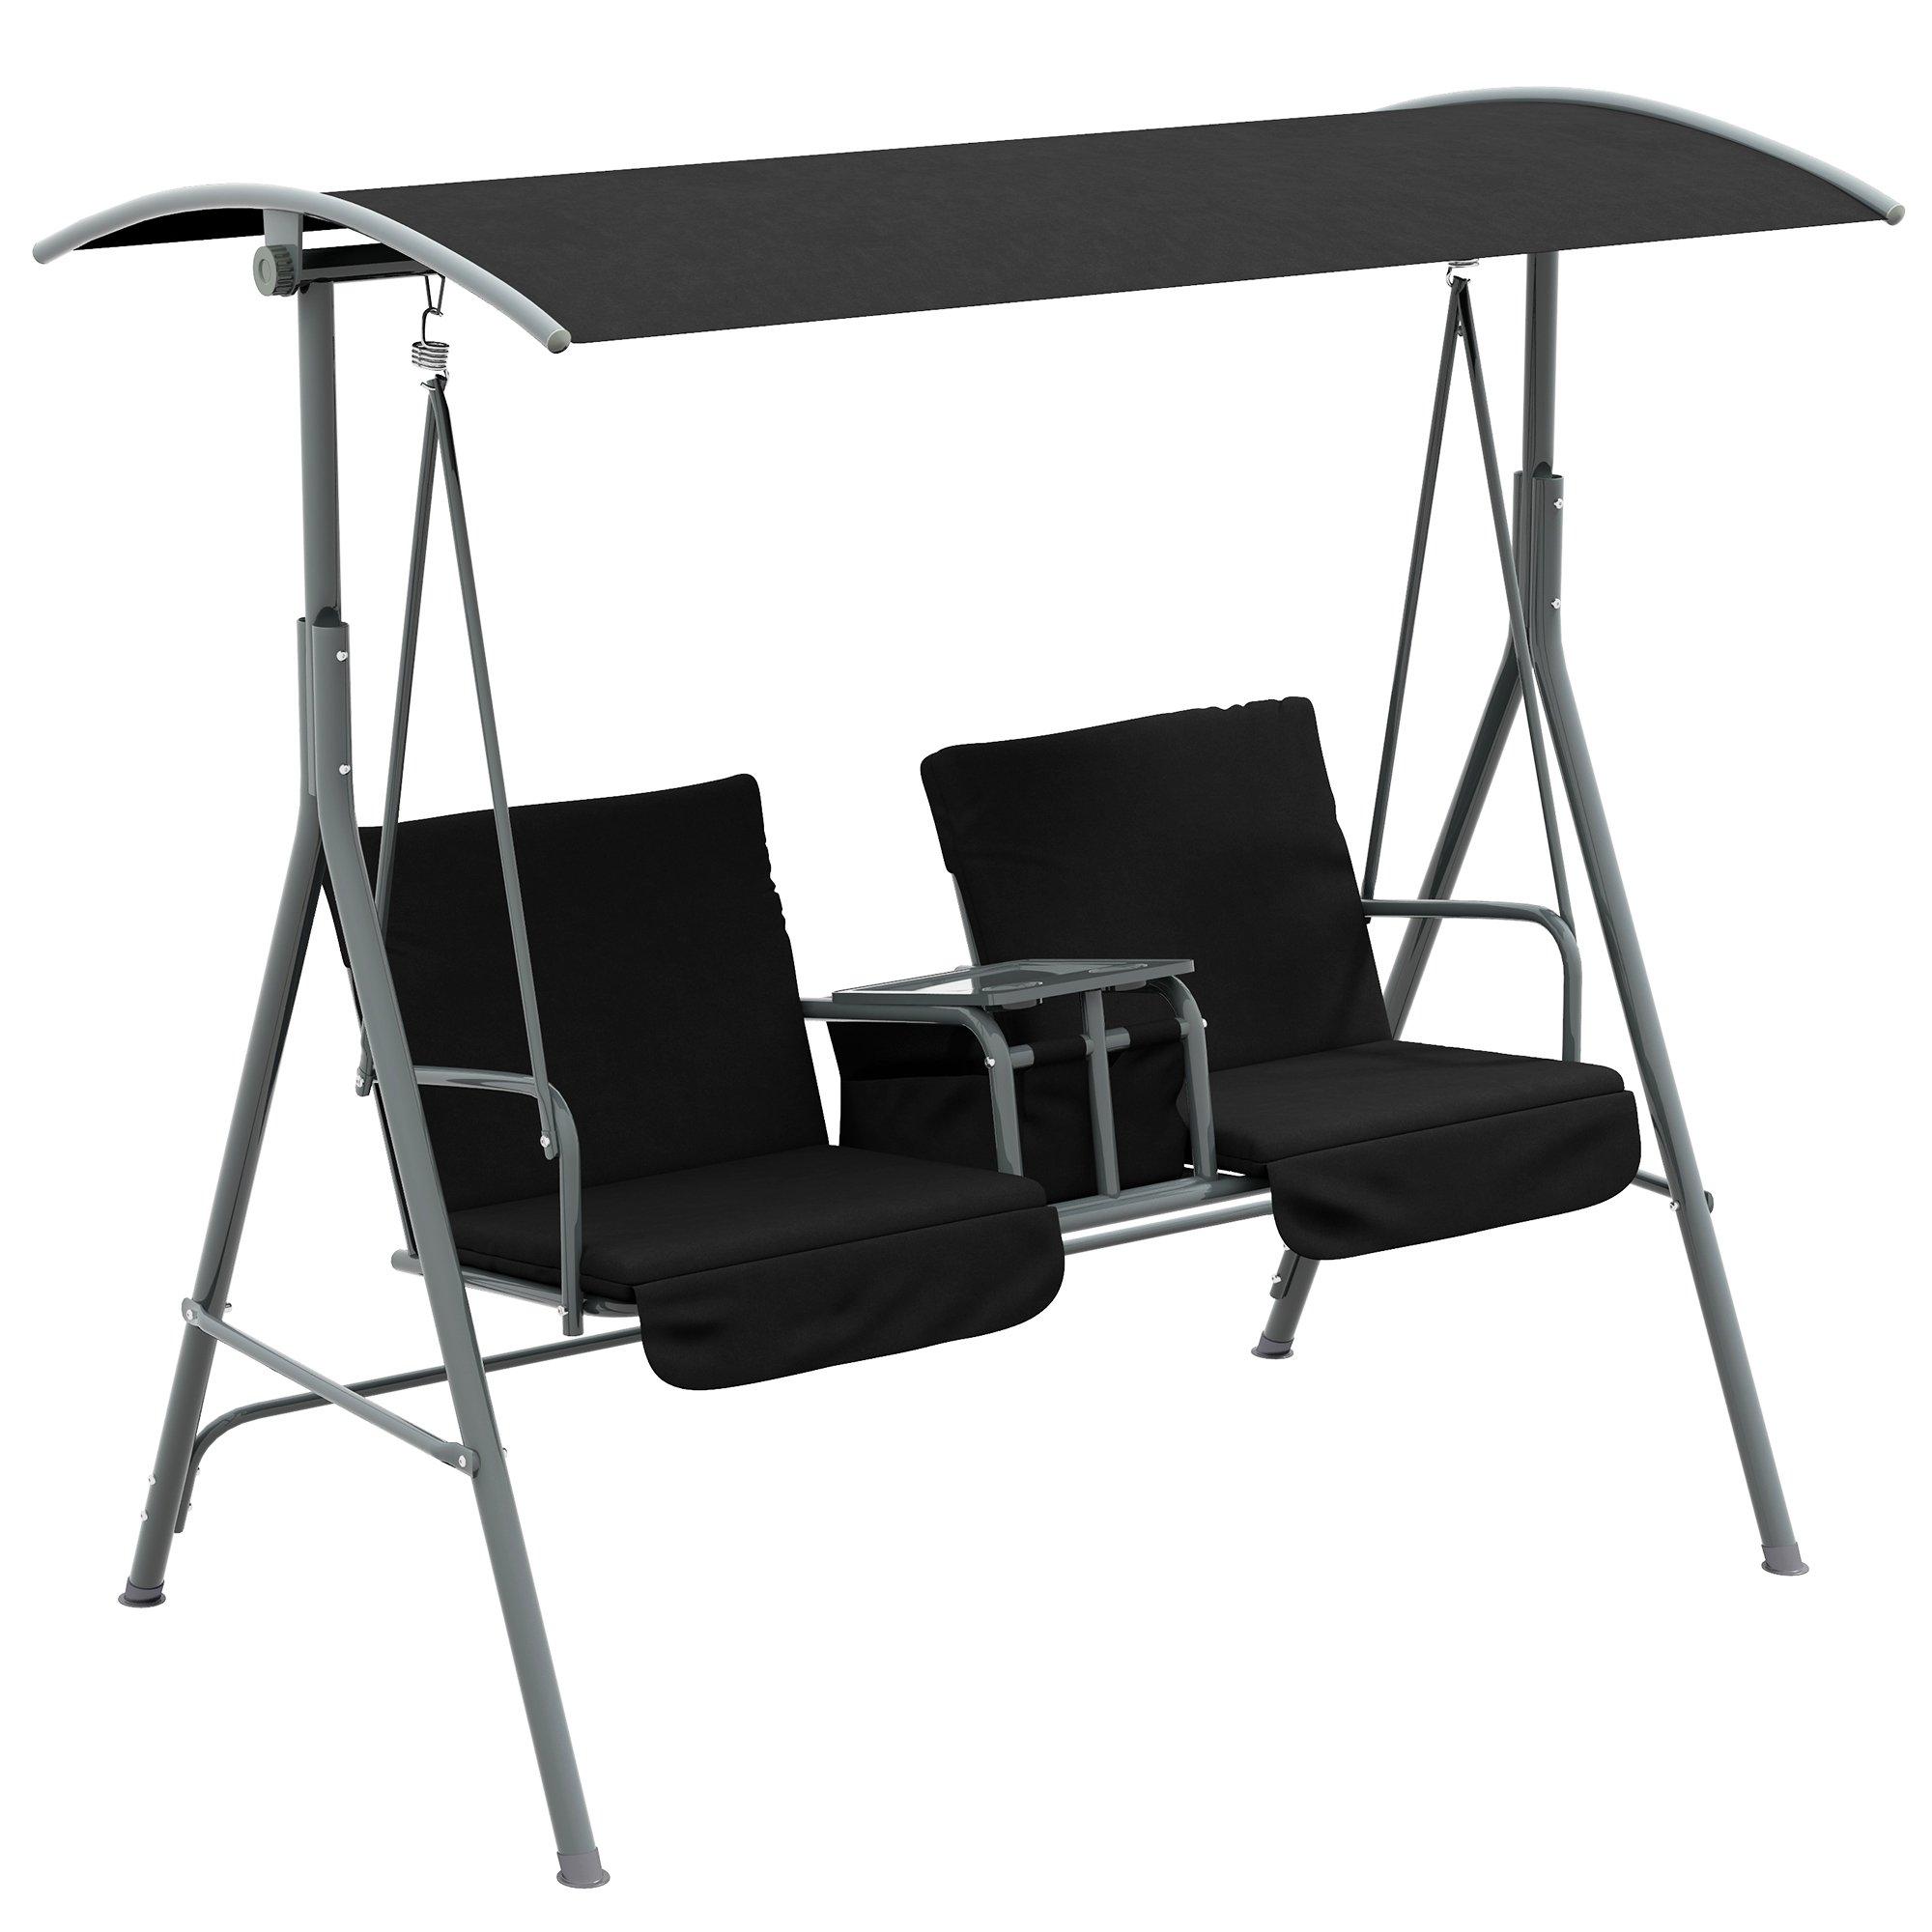 2 Seater Garden Swing Chair w/ Tilting Canopy, Drink Tray & Storage Bag, Black